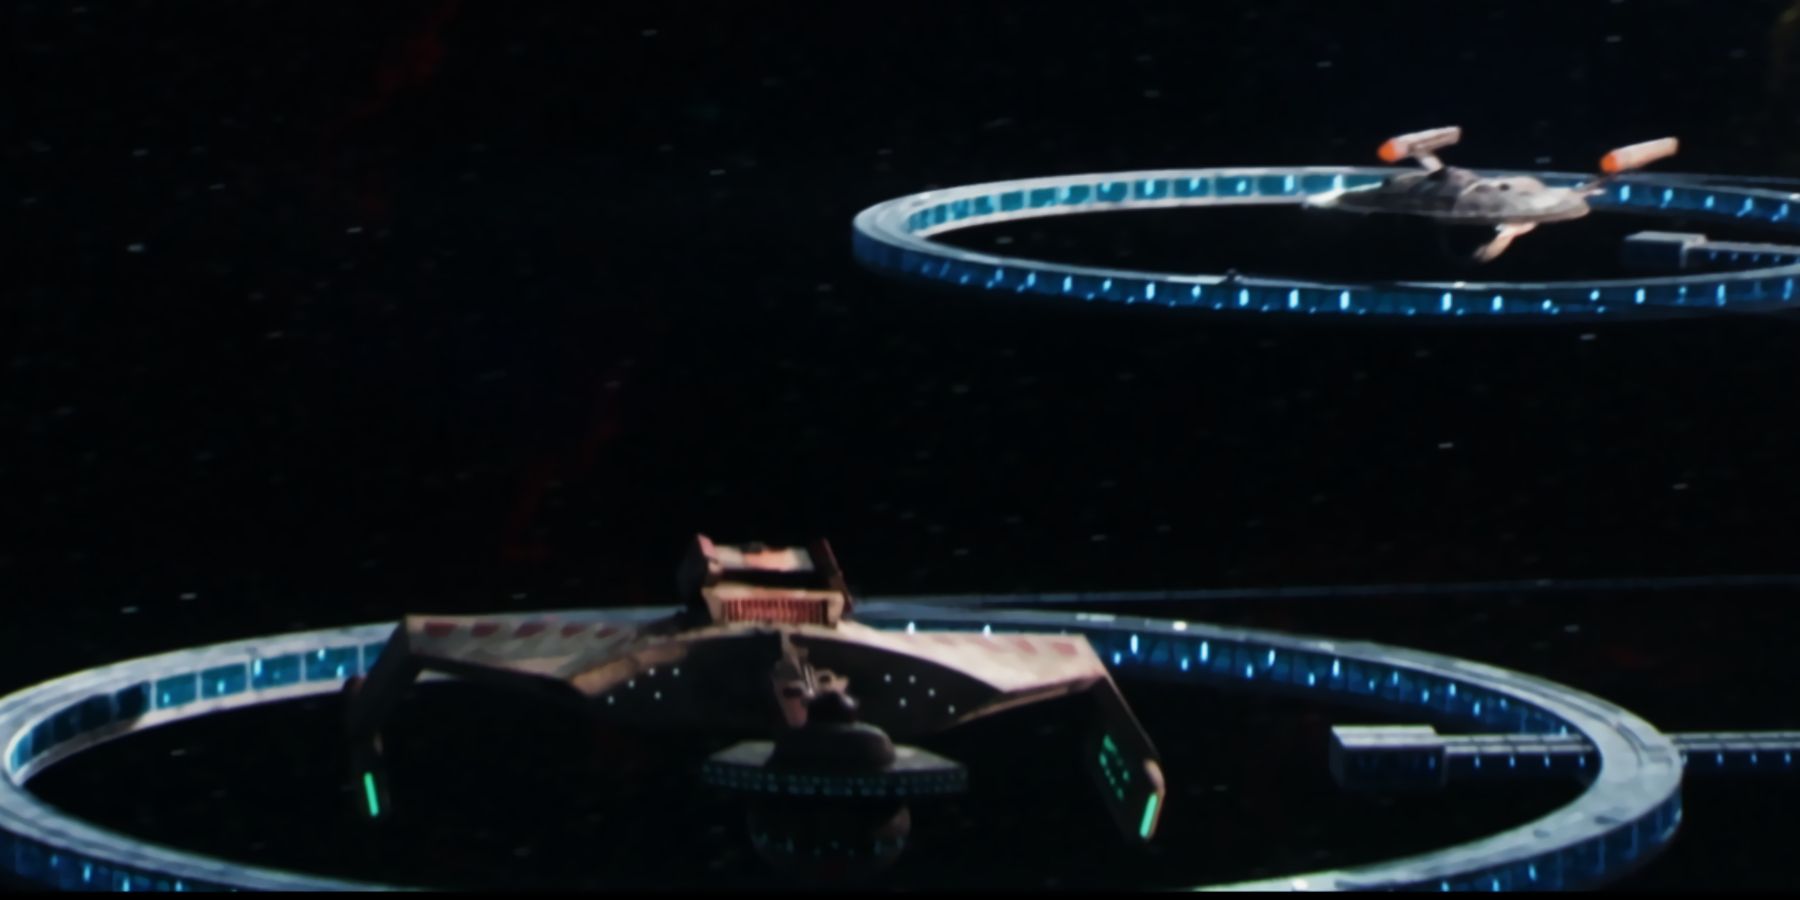 A Klingon Bird-of-Prey and the Enterprise NX-01 at the Fleet Museum in Star Trek: Picard season 3